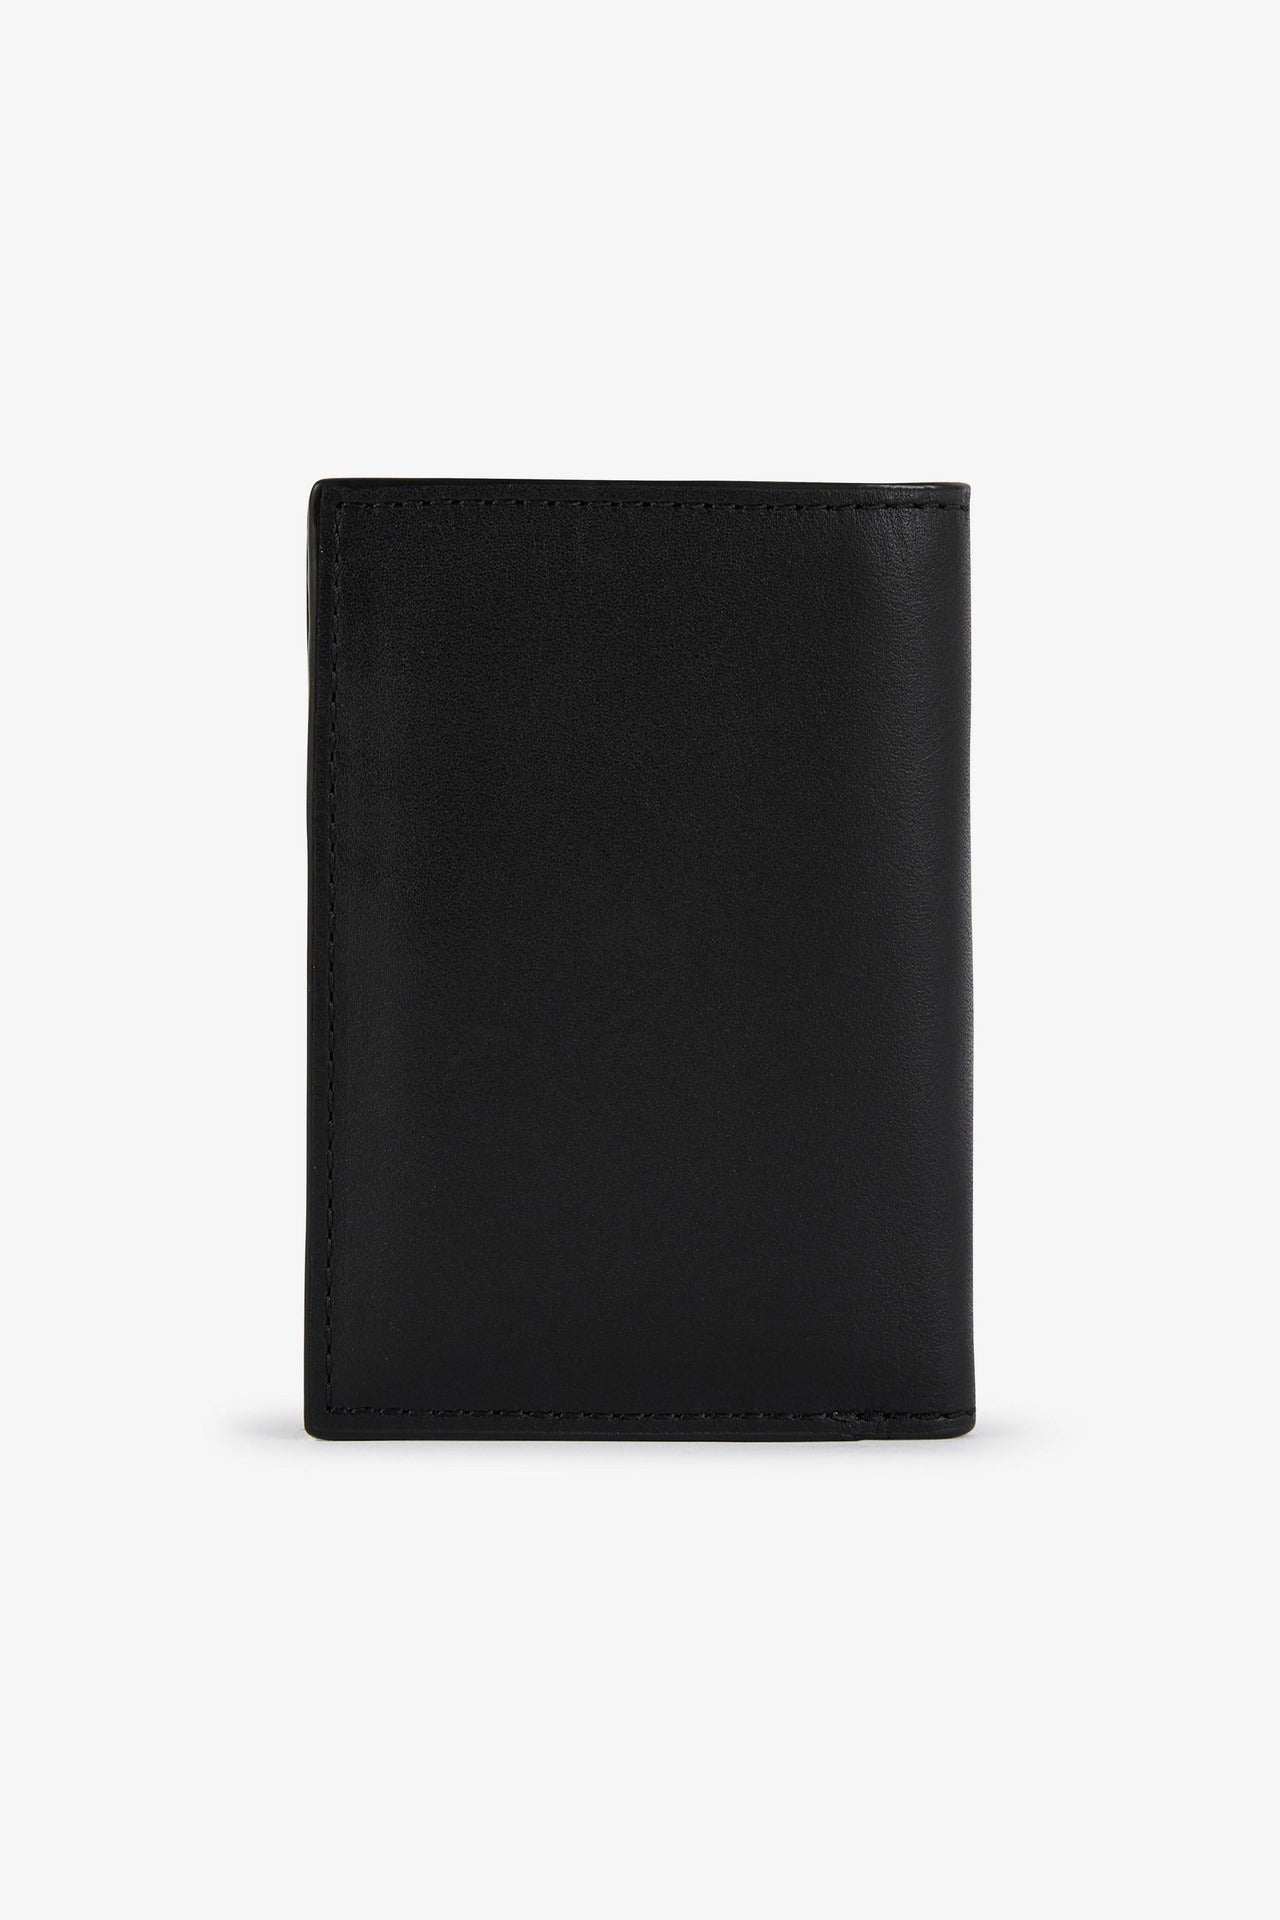 Porte feuille noir en cuir - Image 3